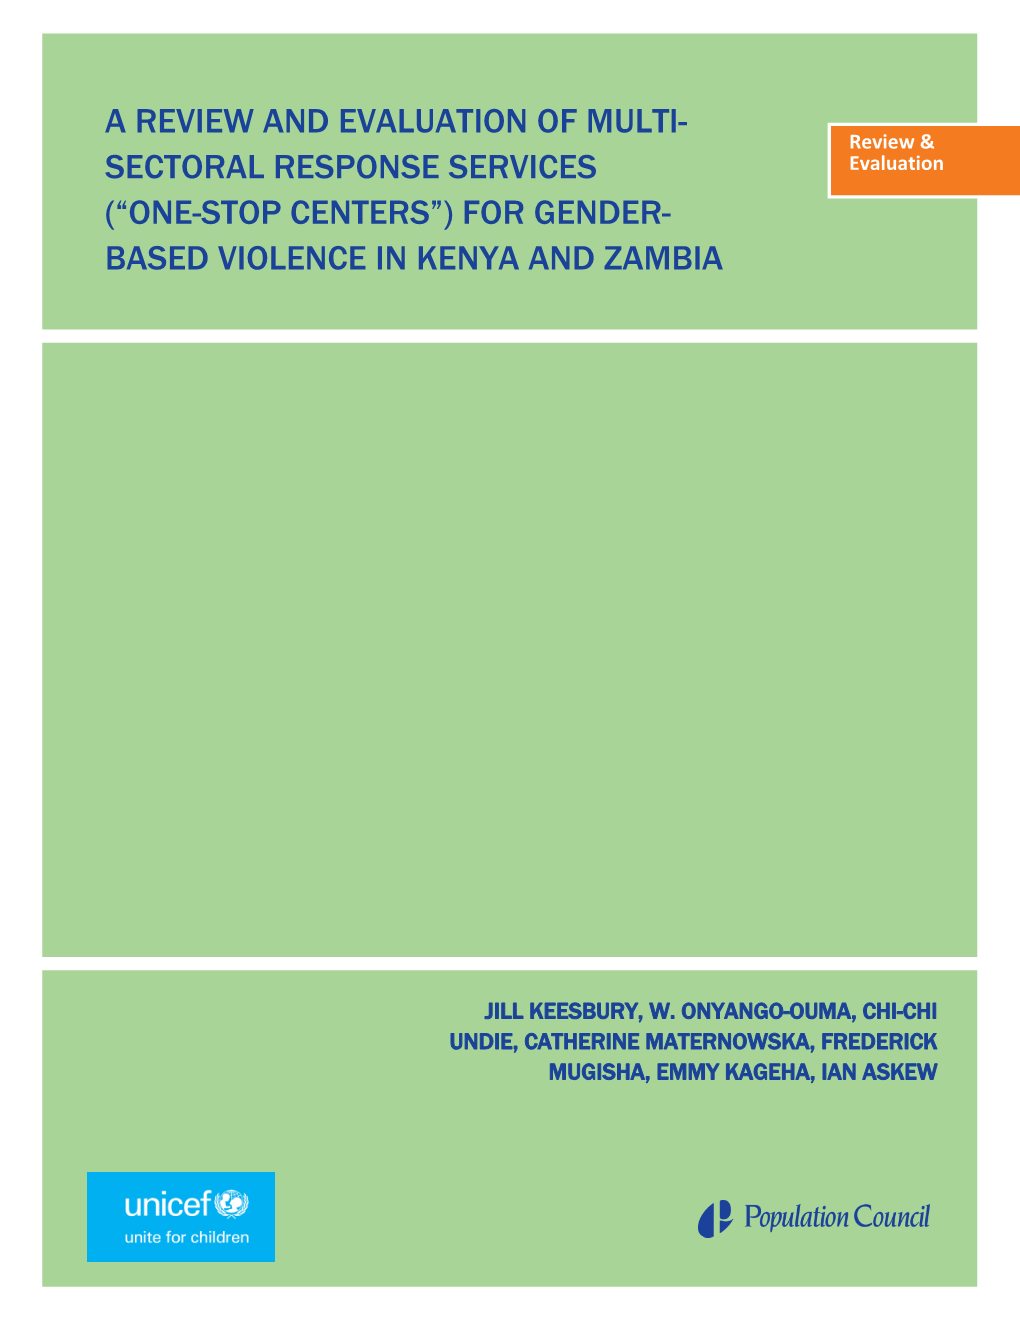 ("One-Stop Centers") for Gender-Based Violence in Kenya An